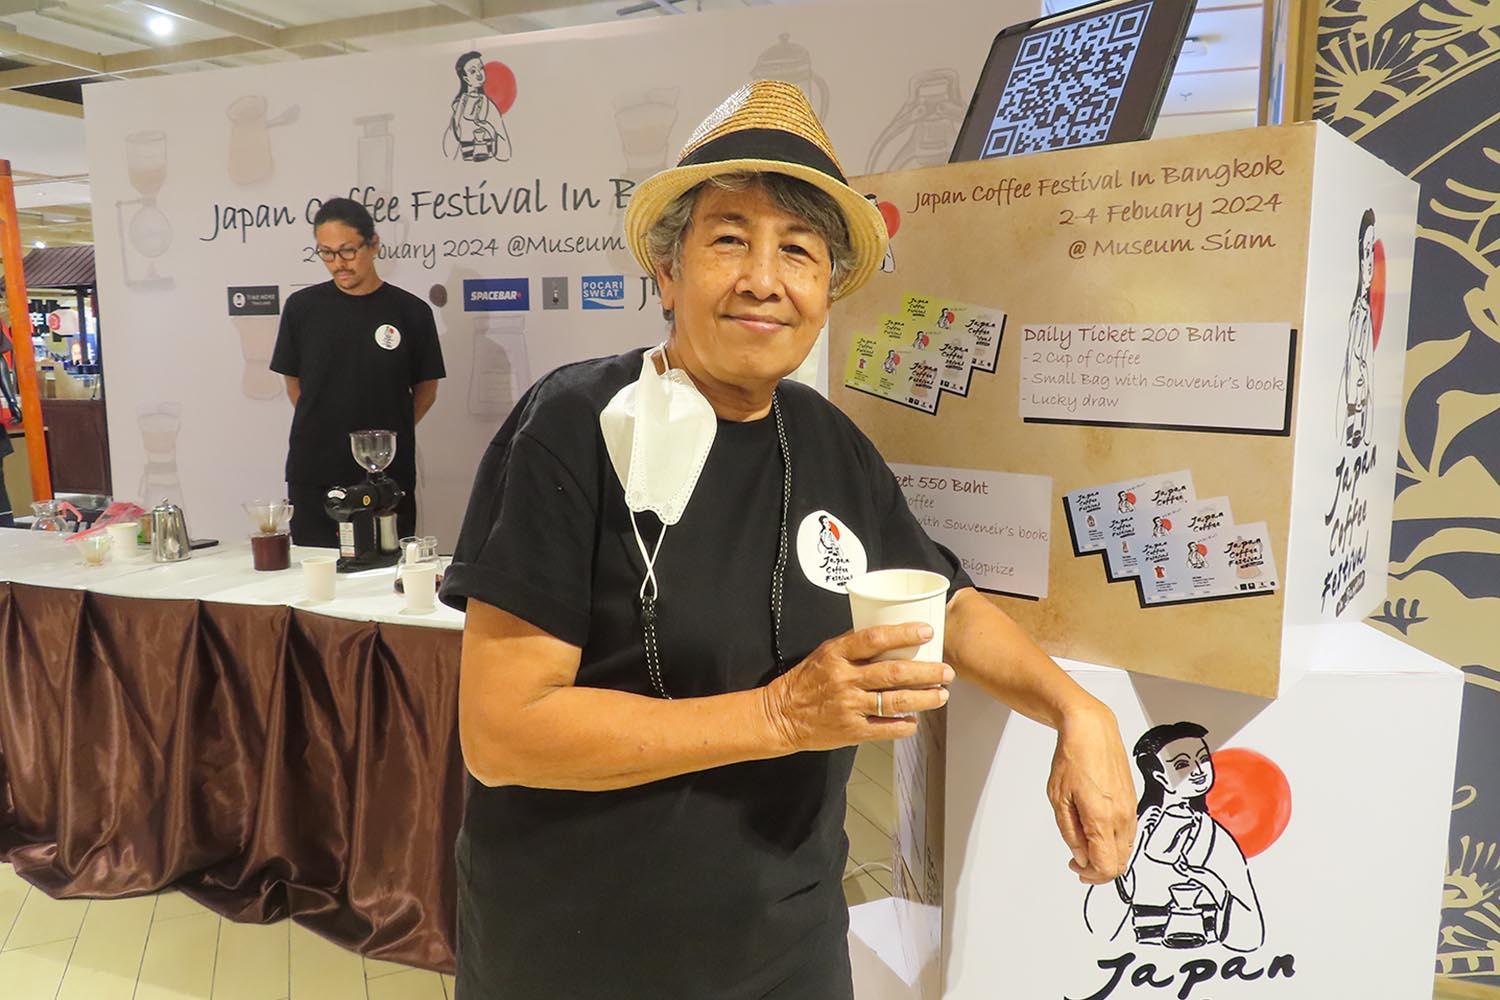 Japan-coffee-festival-bangkok-SPACEBAR-Hero.jpg